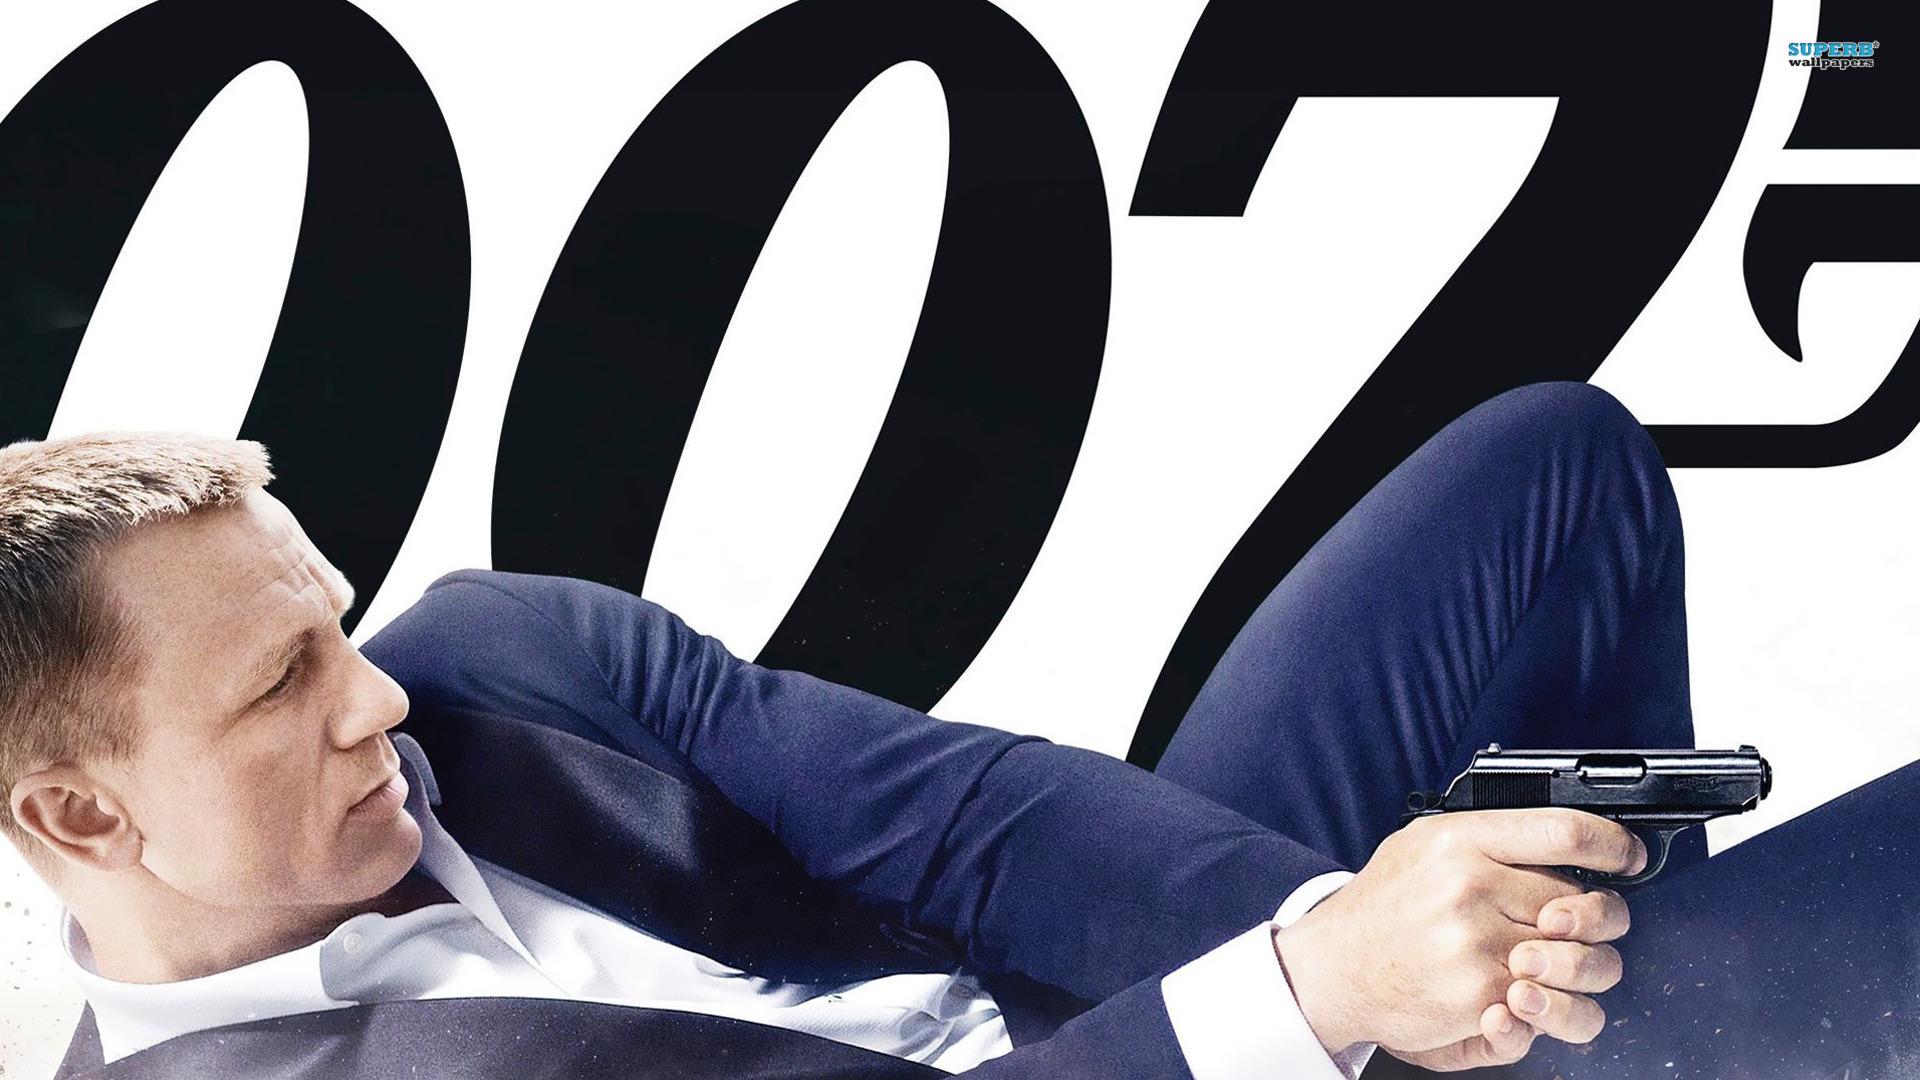 Daniel Craig James Bond Wallpaper : 007, James Bond, Skyfall, Daniel ...